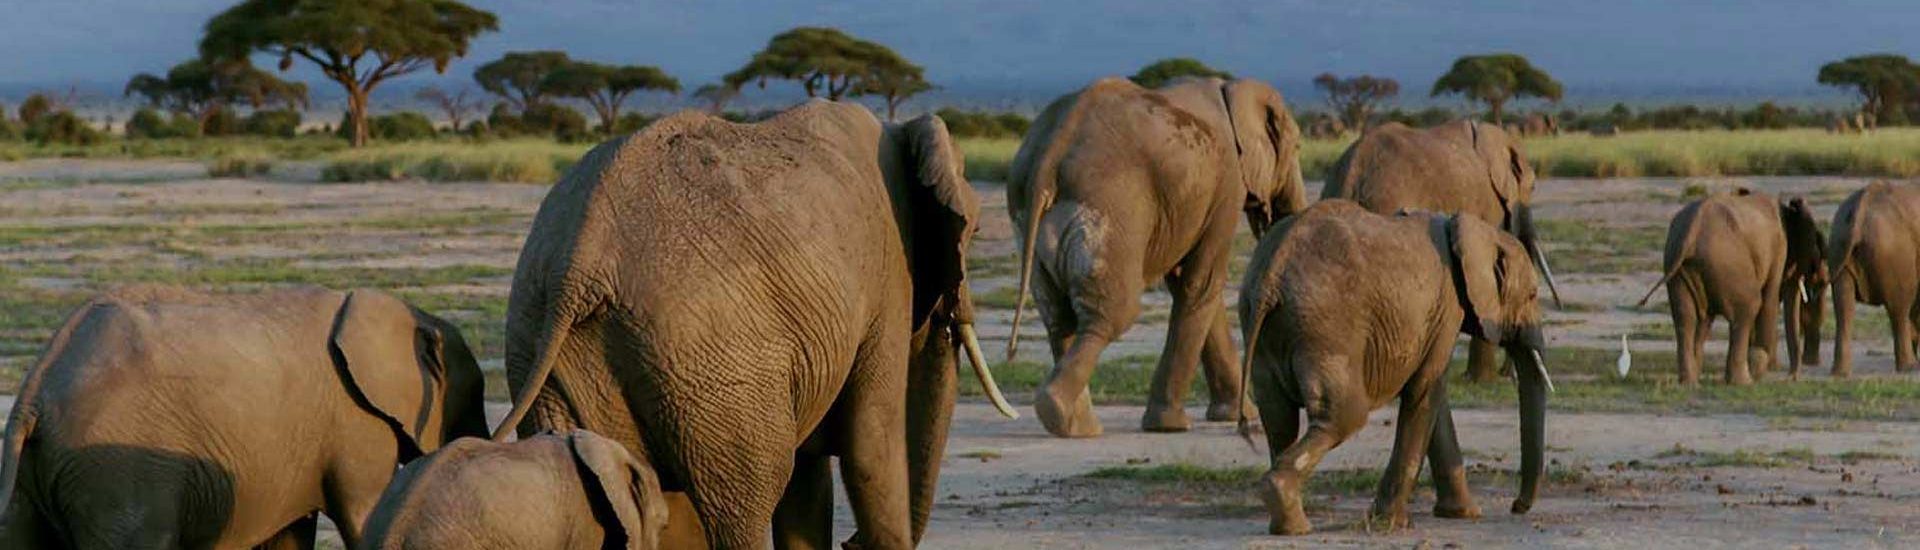 Tanzania Safari Map-elephant